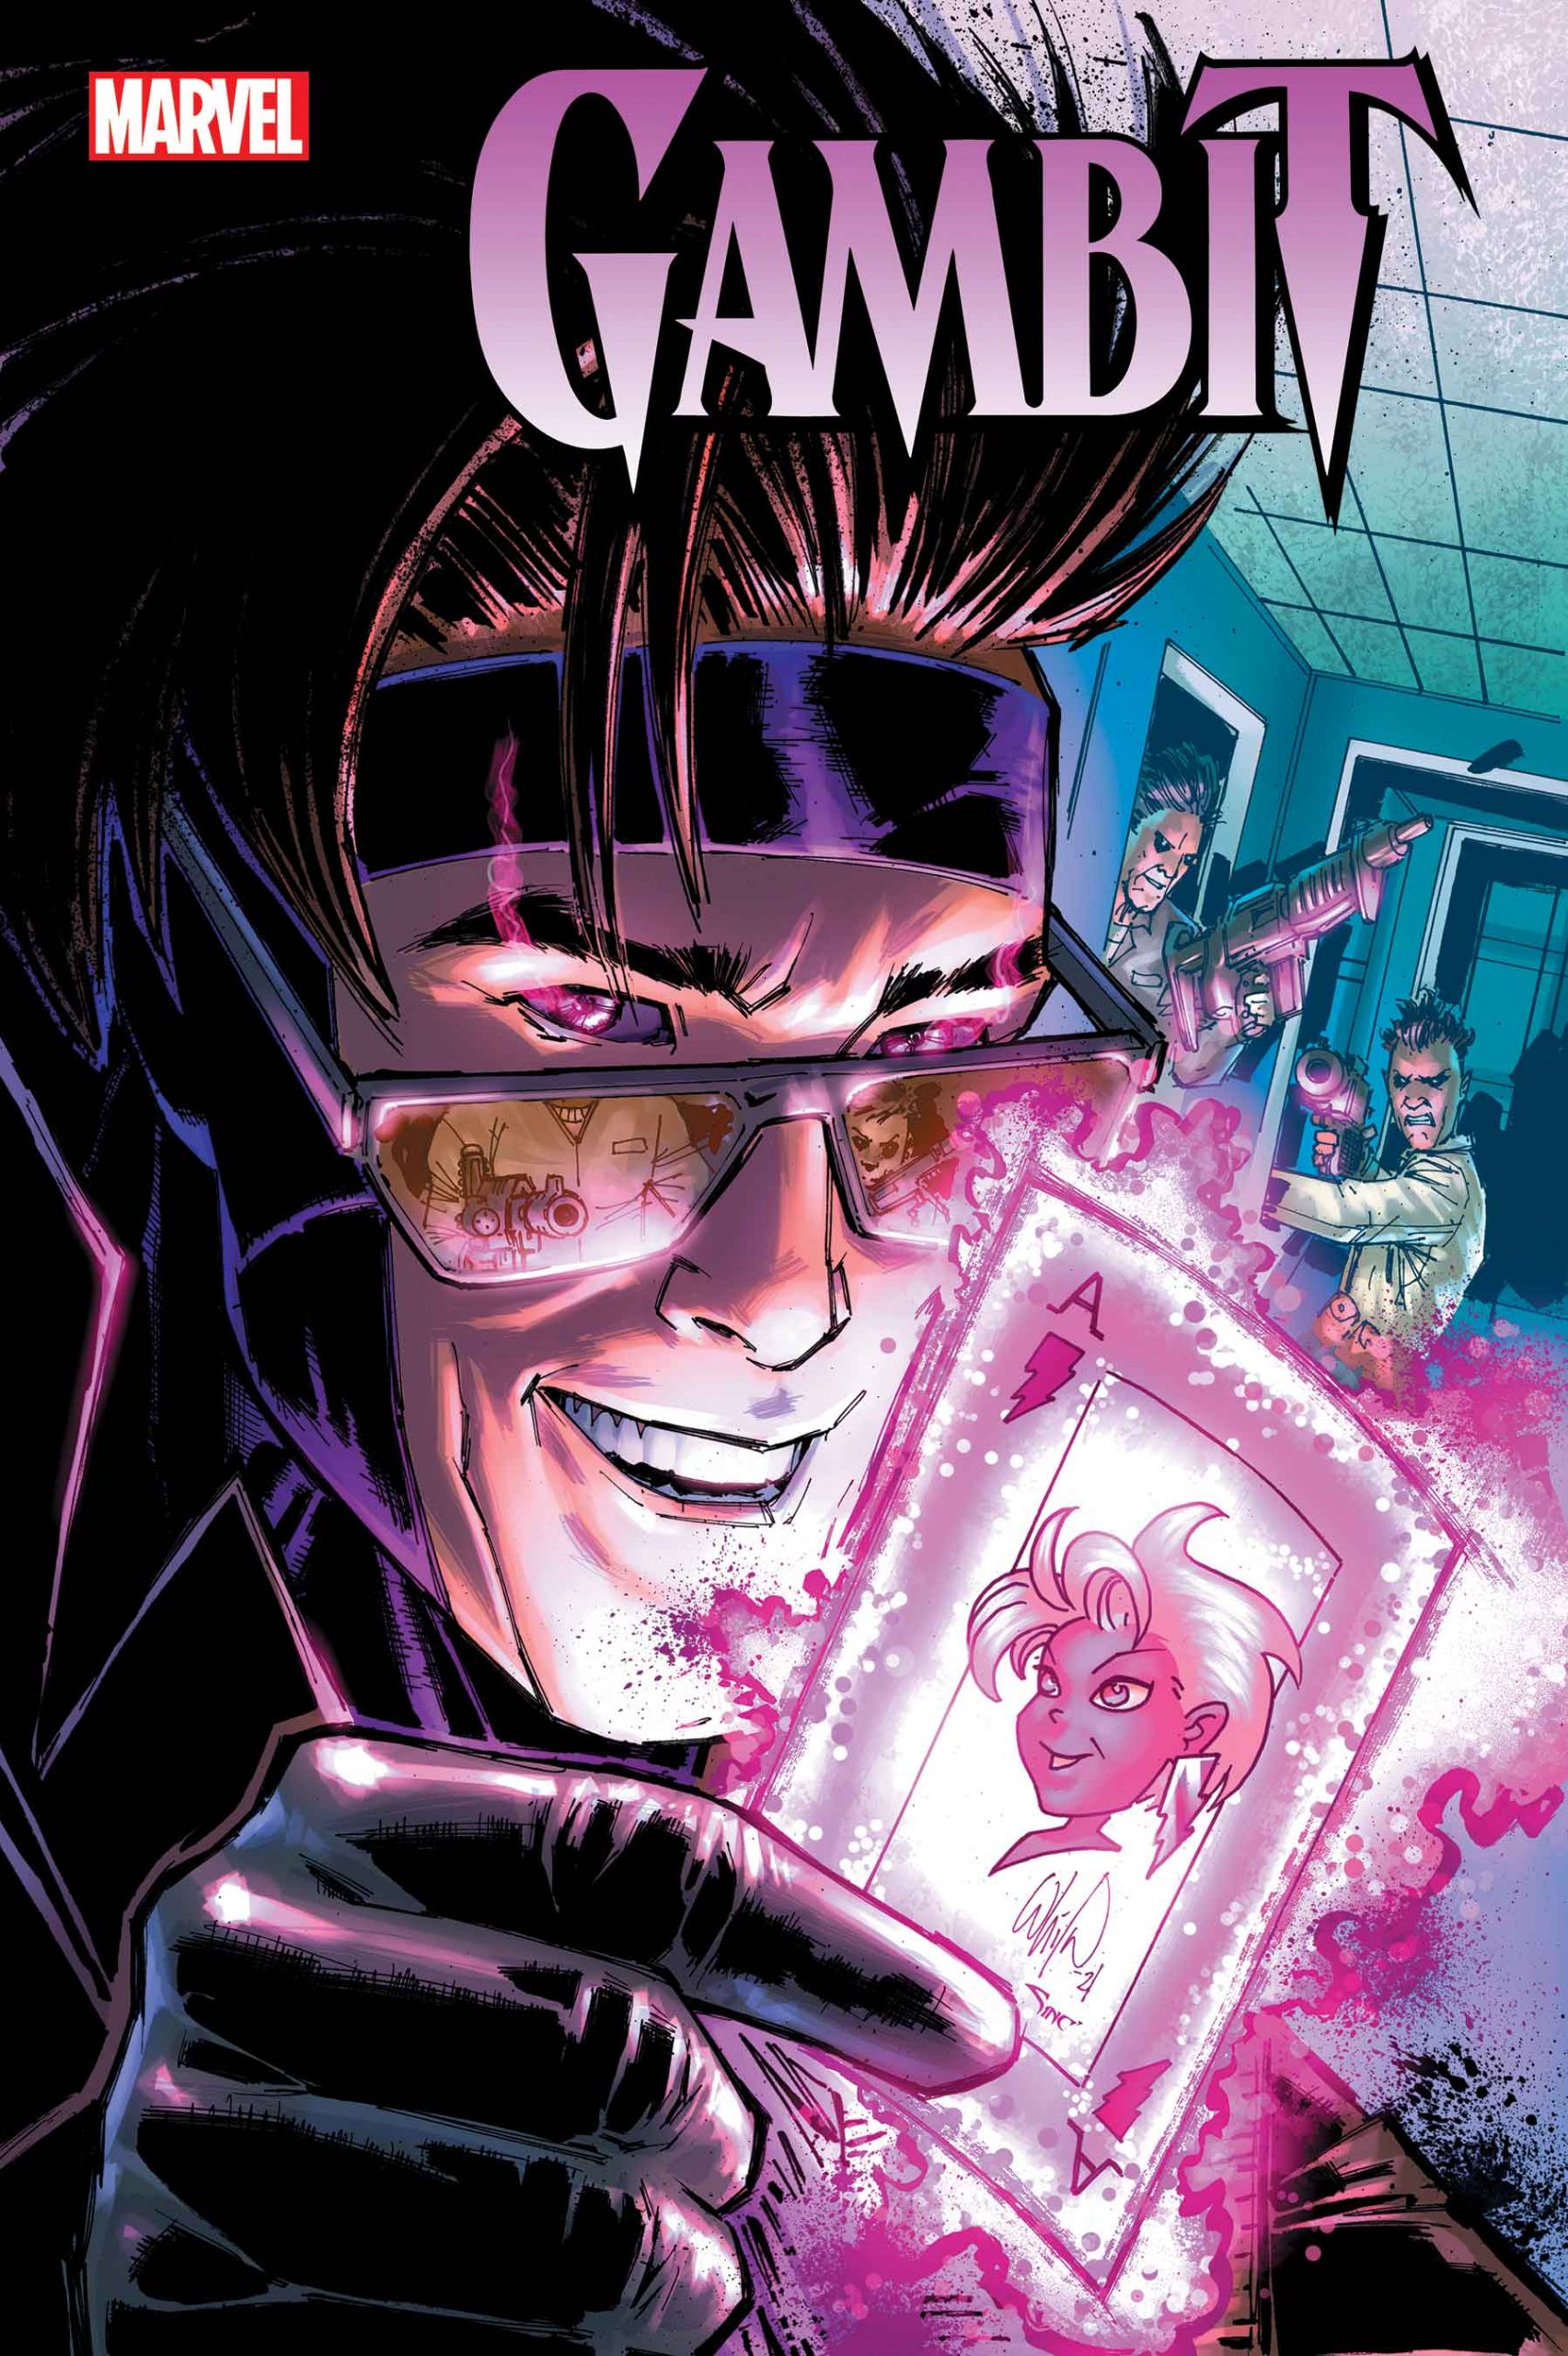 Marvel First Look: Gambit #2